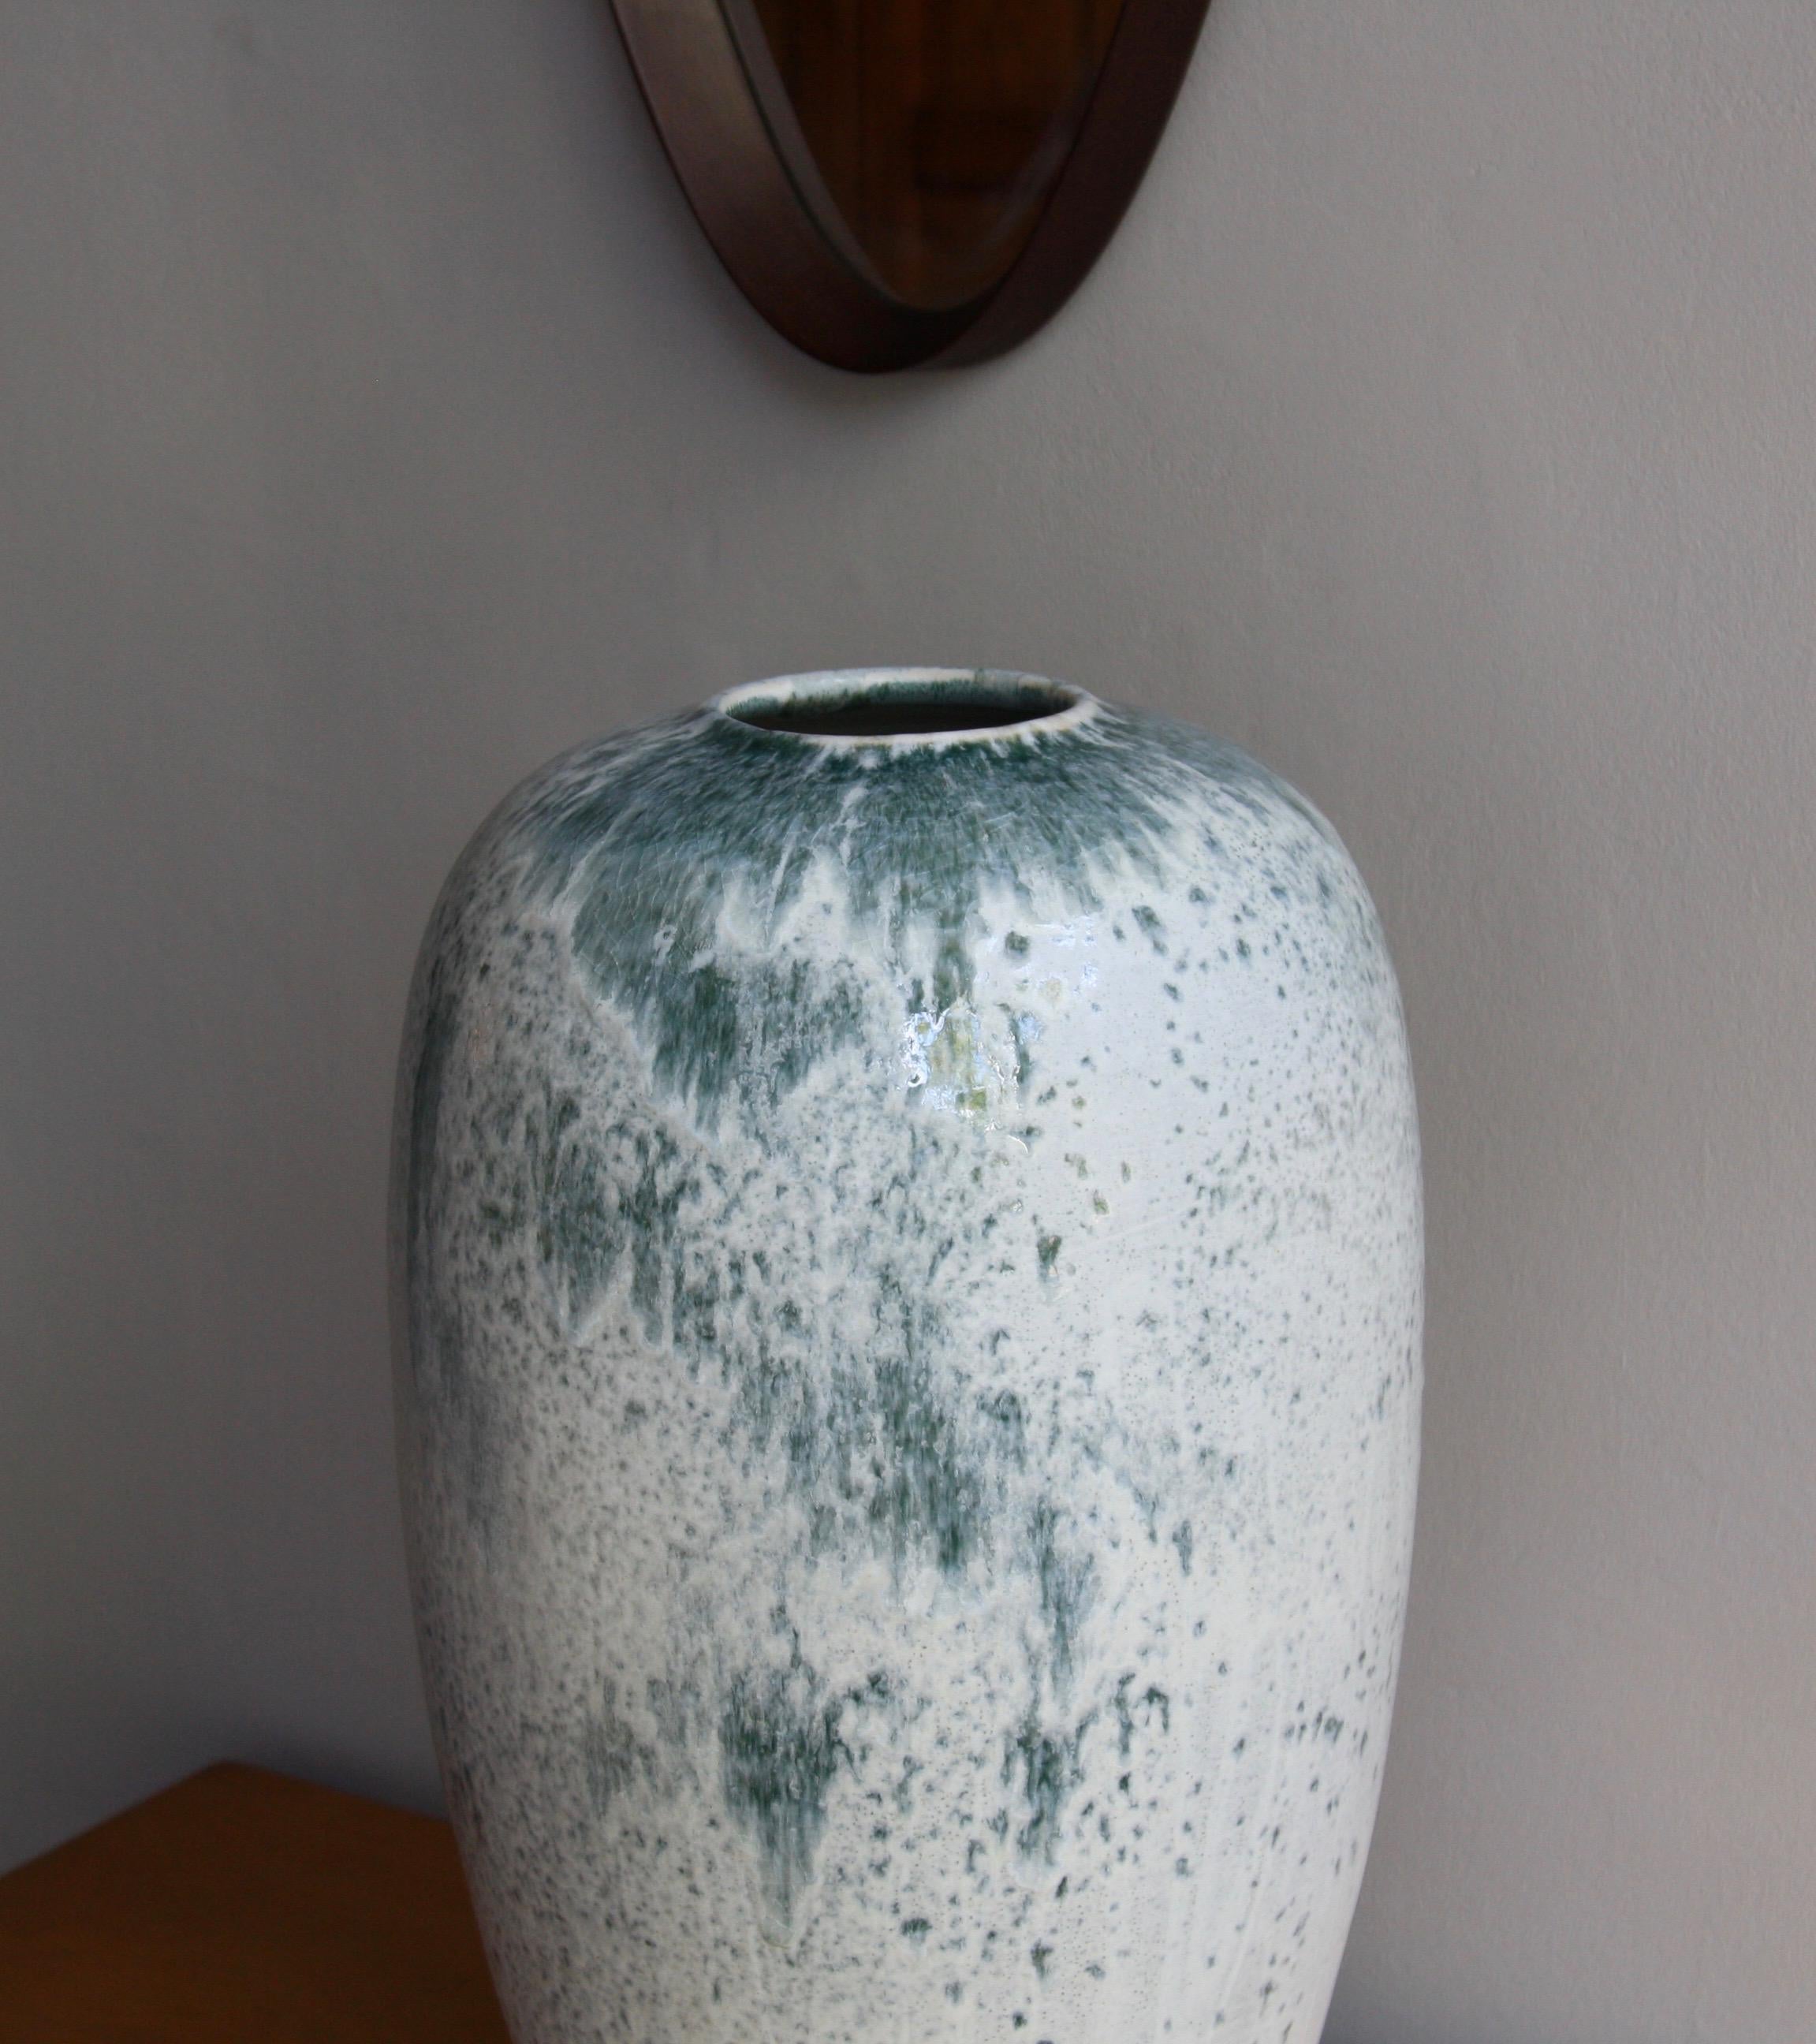 Kasper Würtz One Off Stoneware 'Rising Balloon' Vase #1 Blue and White Glaze 2